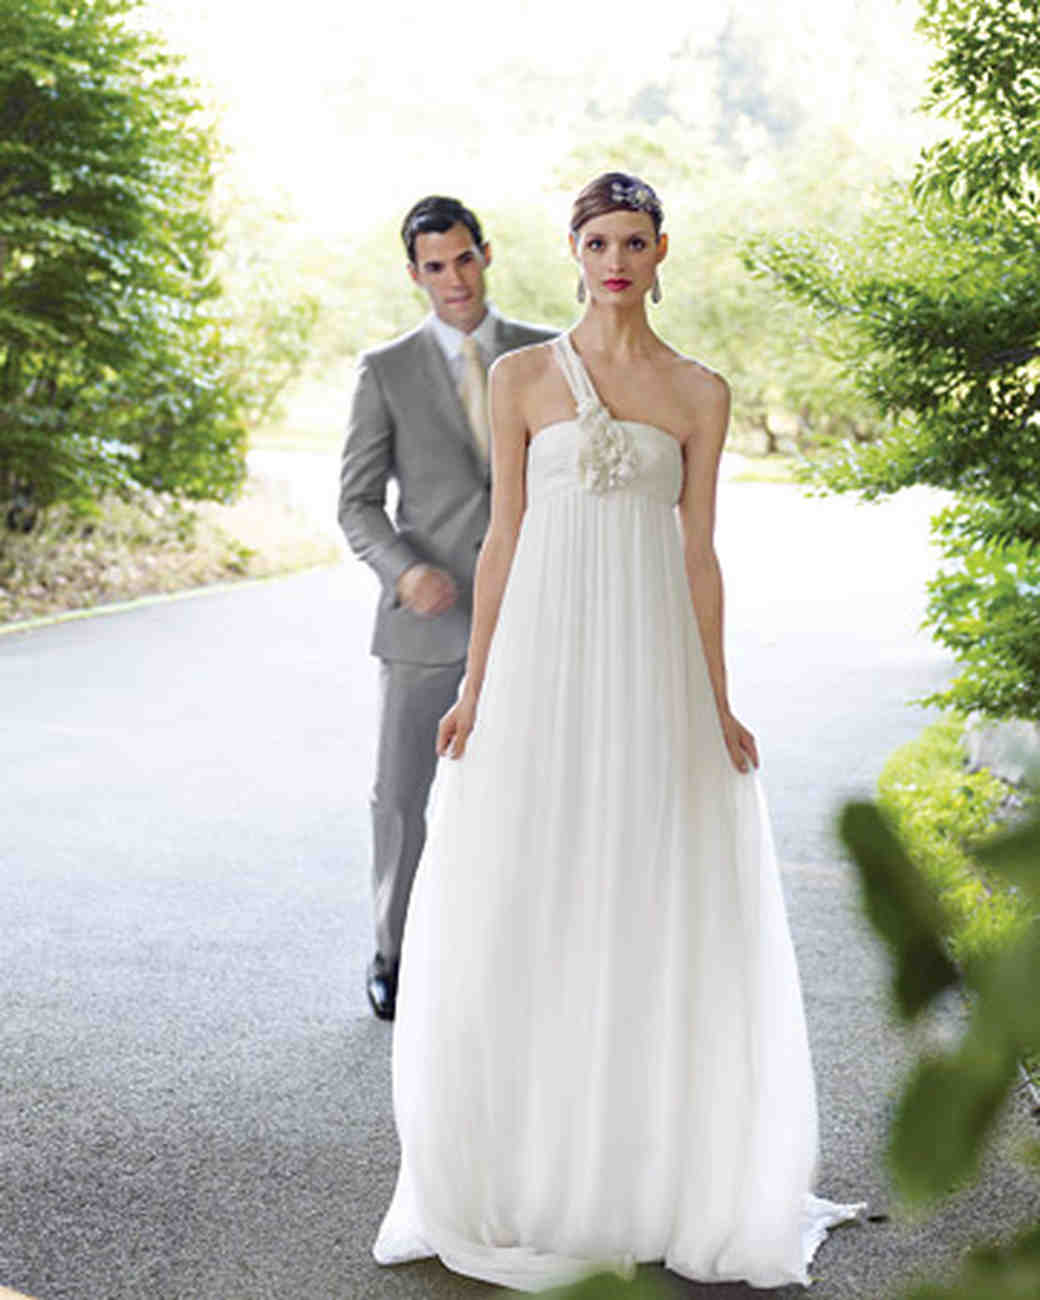 Backyard Wedding Dresses Guest : A Comprehensive Guide to Wedding Guest Attire | Martha ...